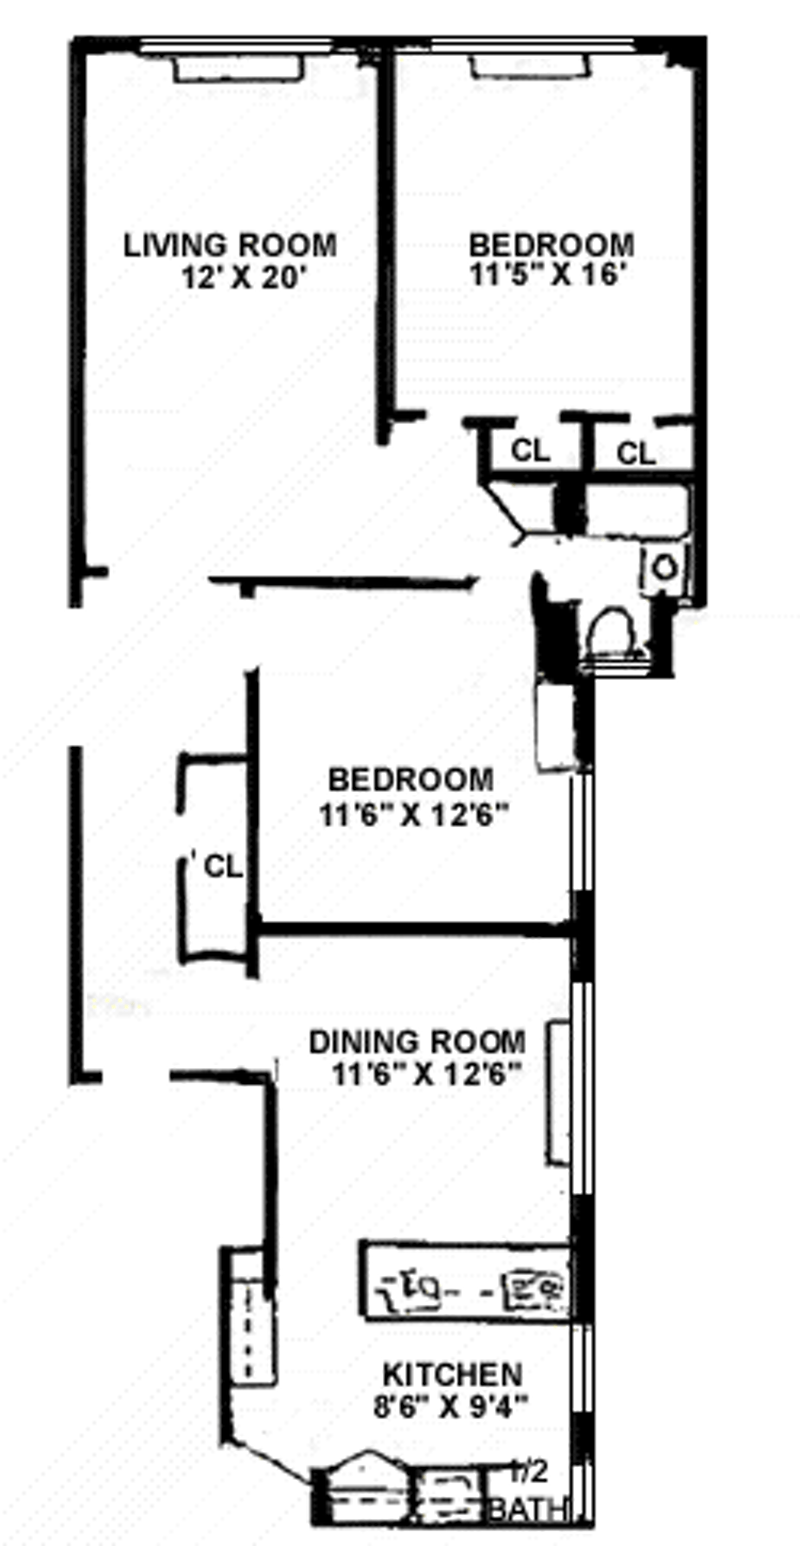 Floorplan for 40 West 84th Street, 6B